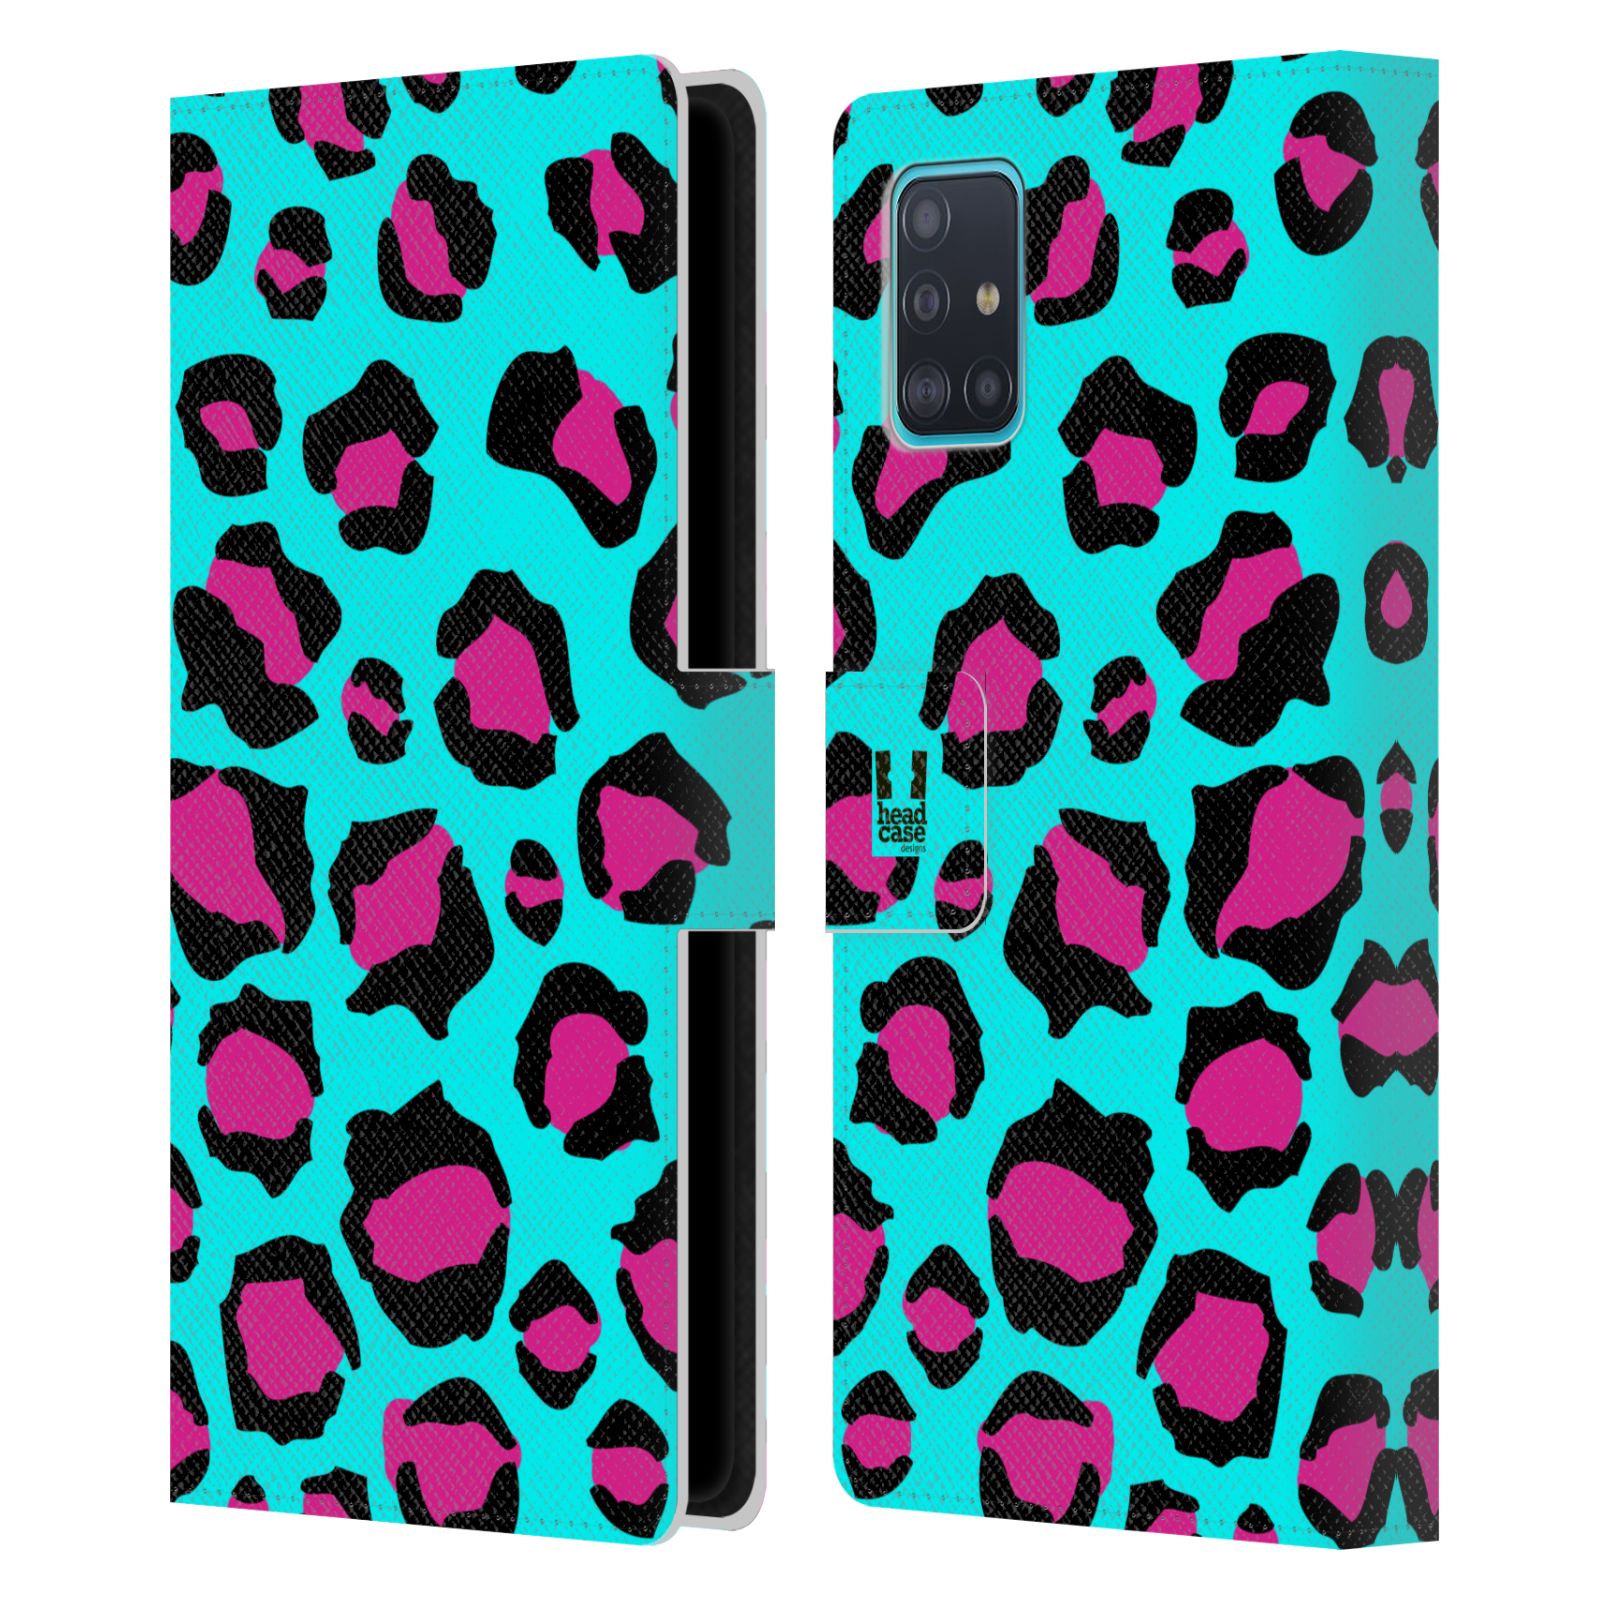 Pouzdro na mobil Samsung Galaxy A51 - HEAD CASE - Magický vzor leopard